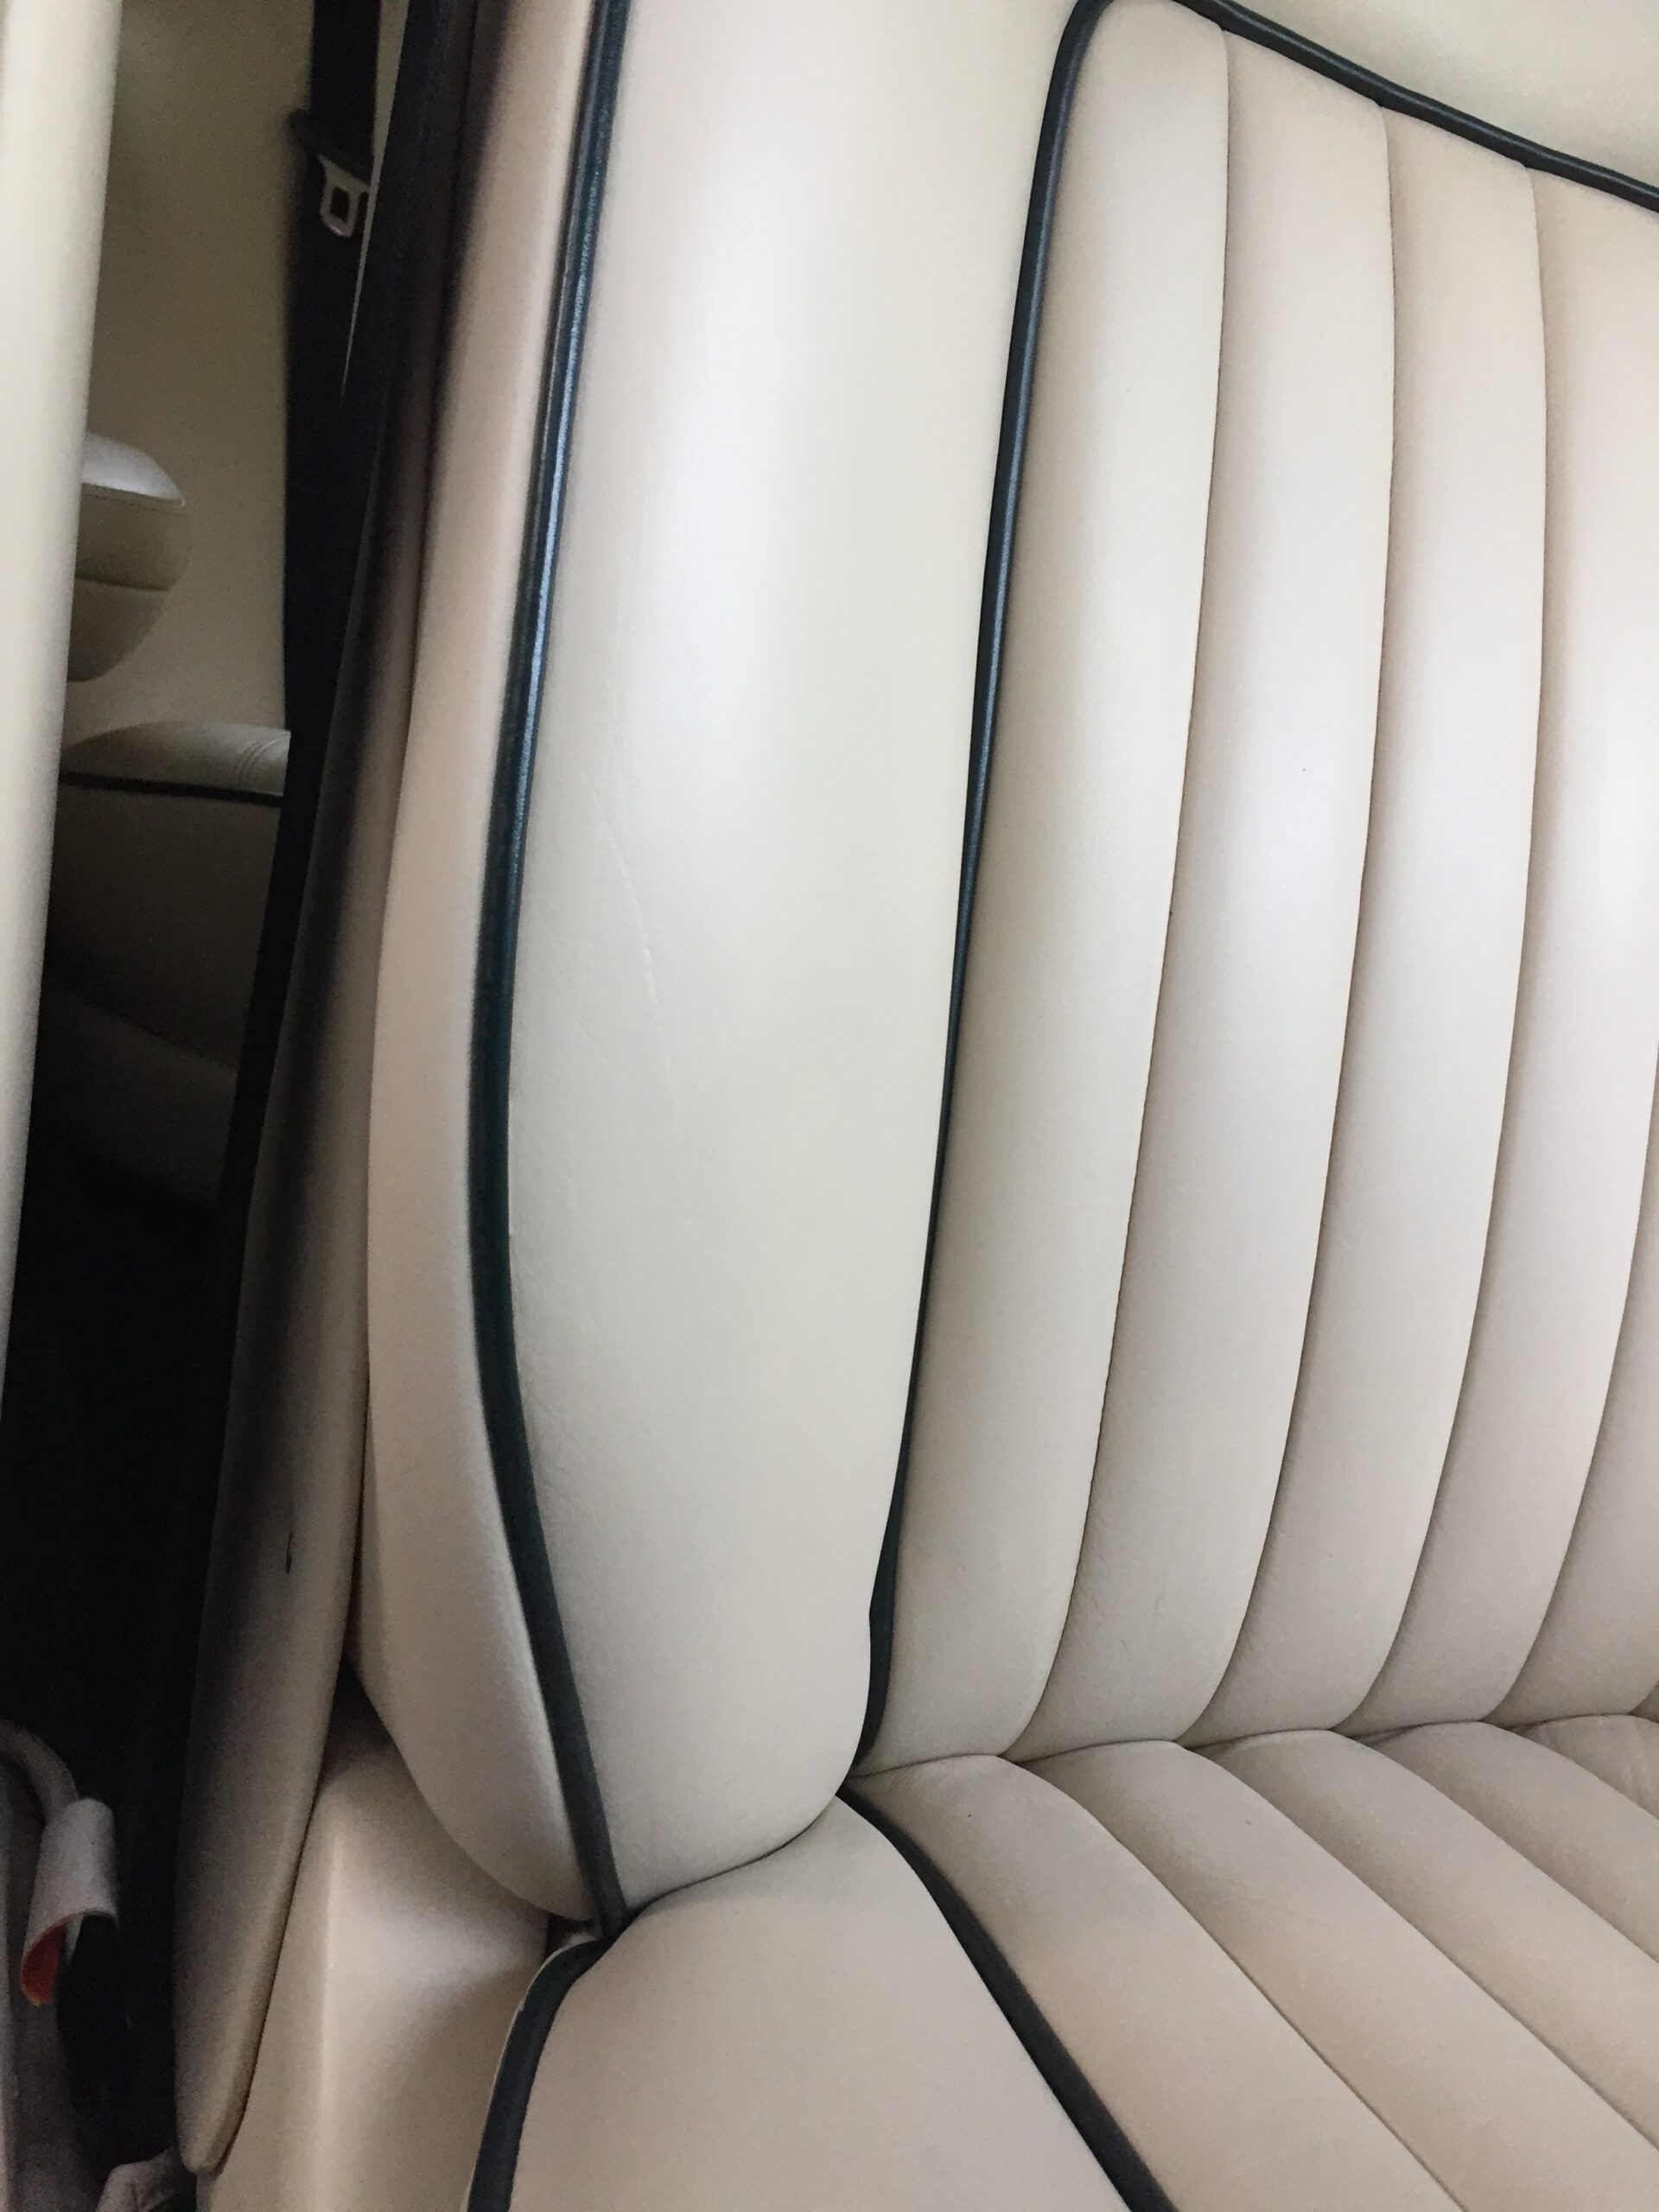 Bentley Mulsanne Turbo R drivers seat before